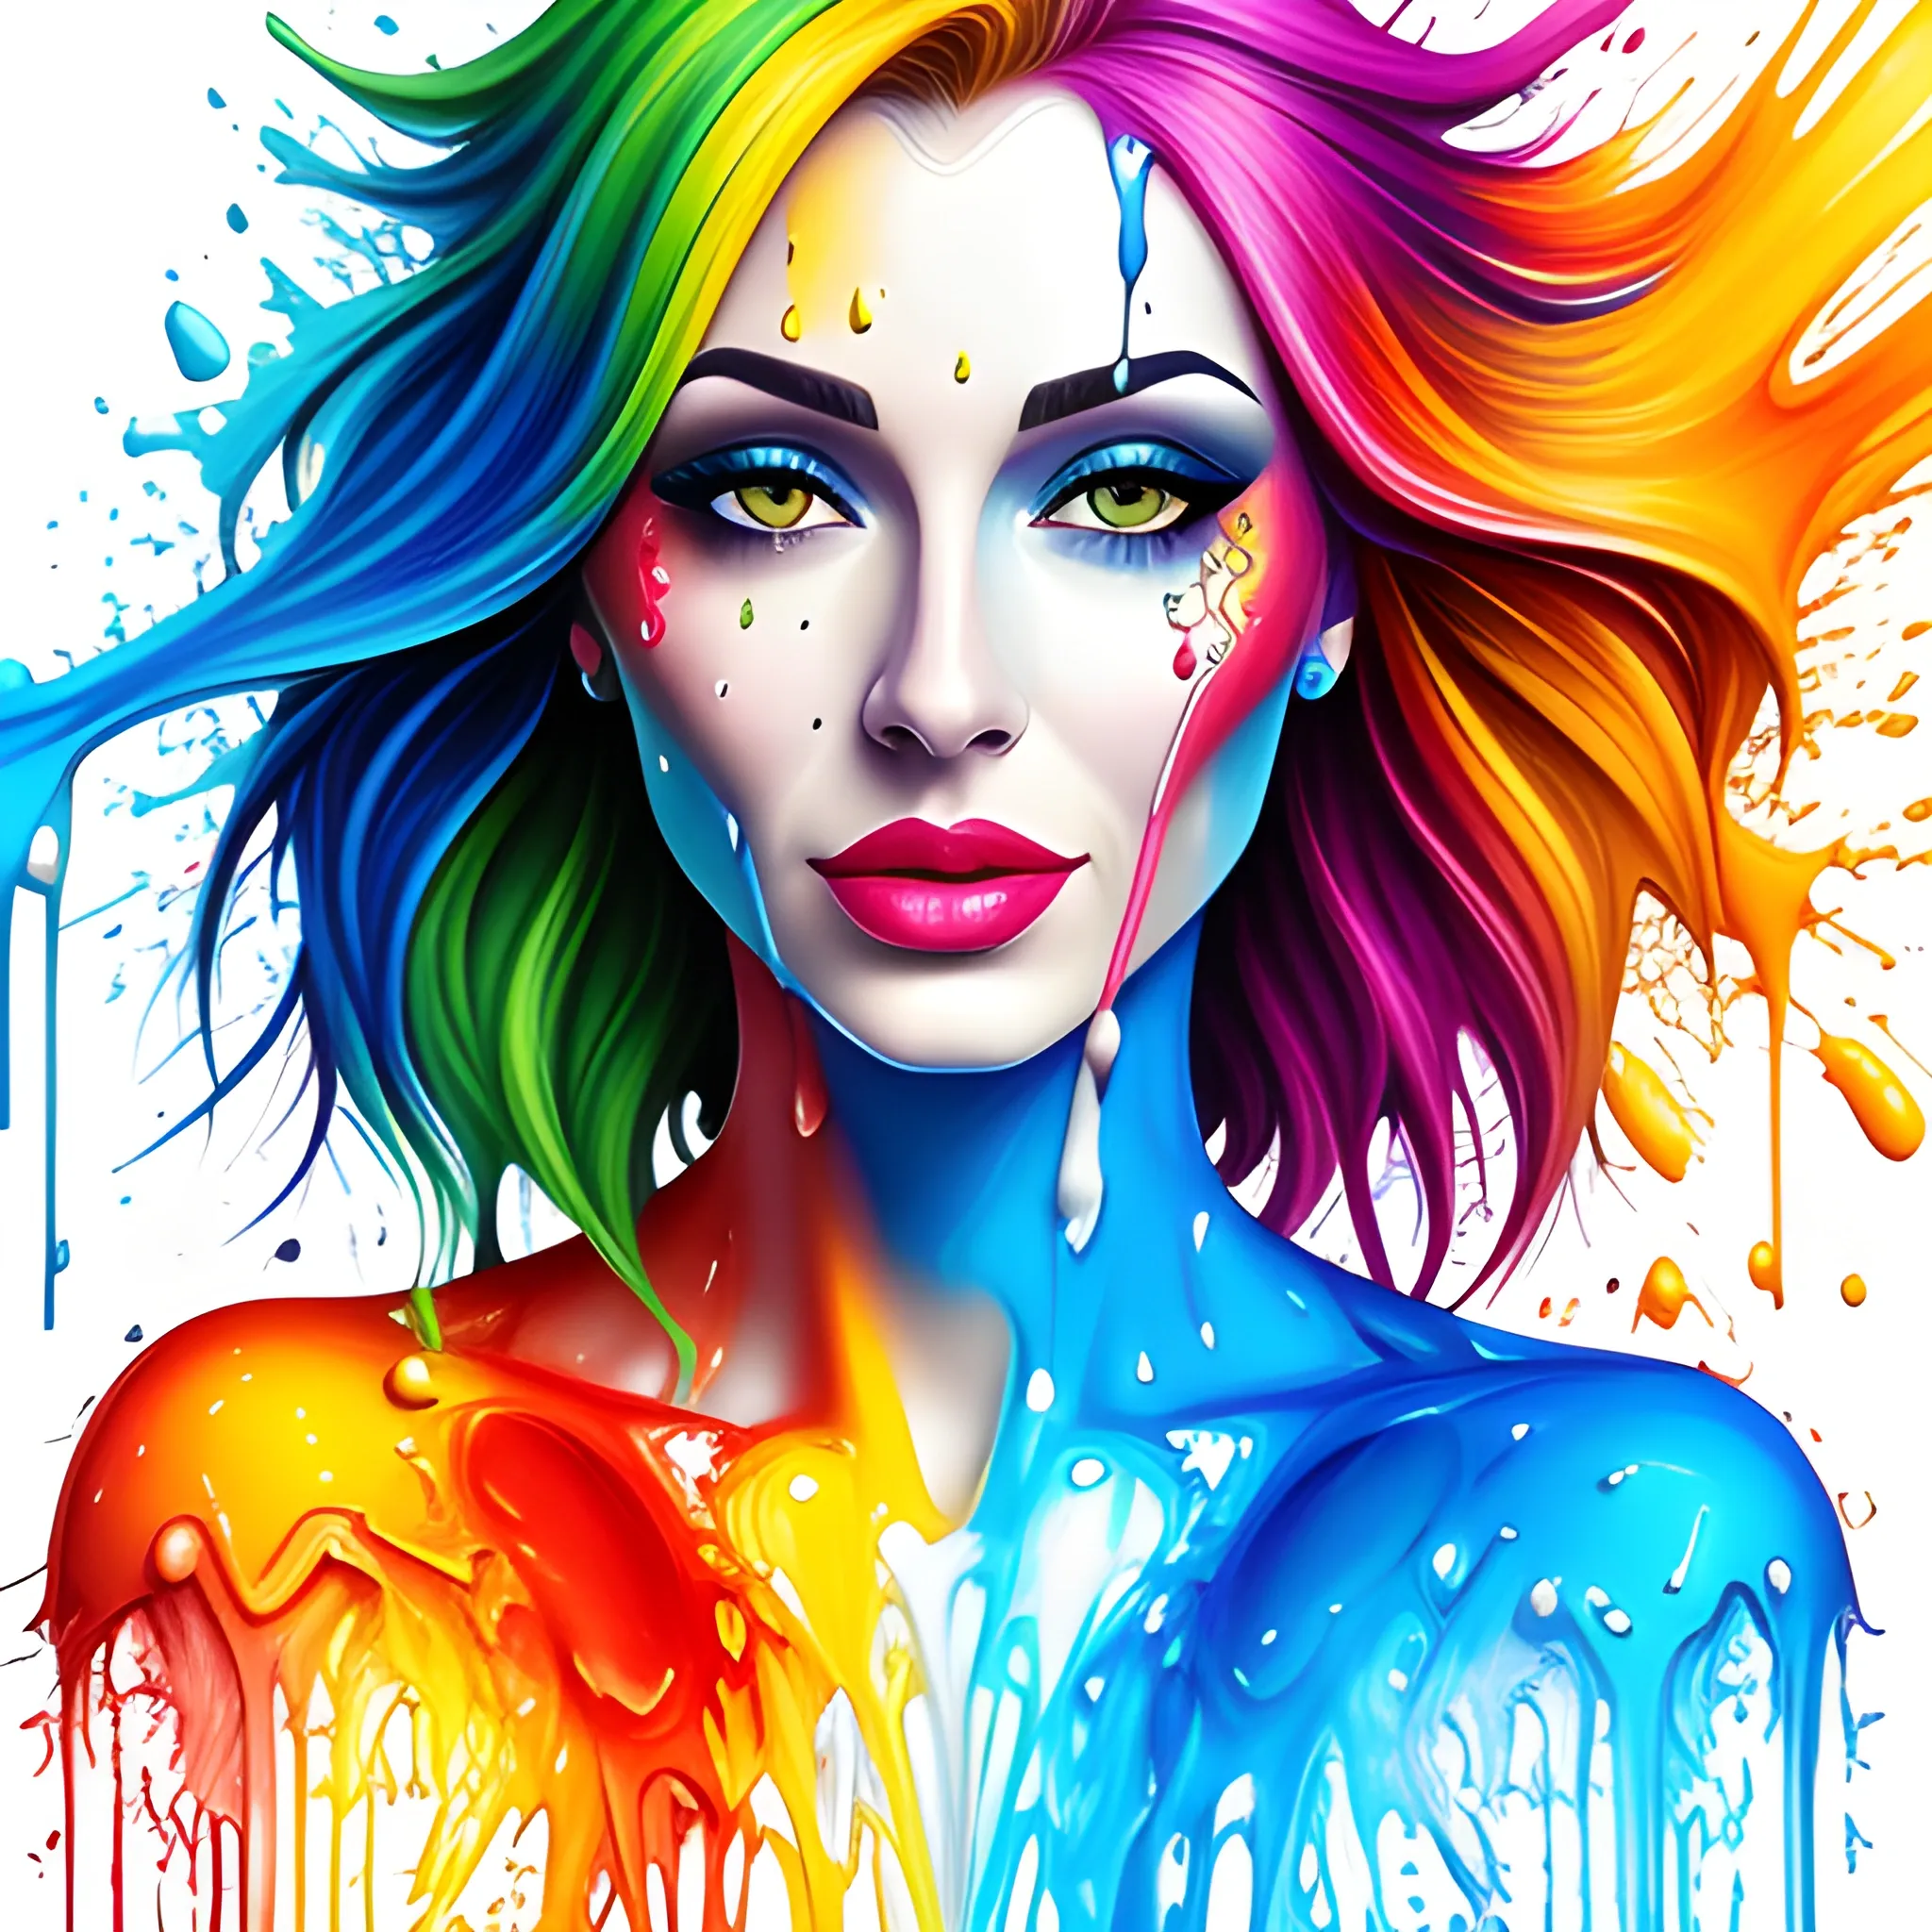 Fluid splash painting art girl, colorful, realistic, high quality